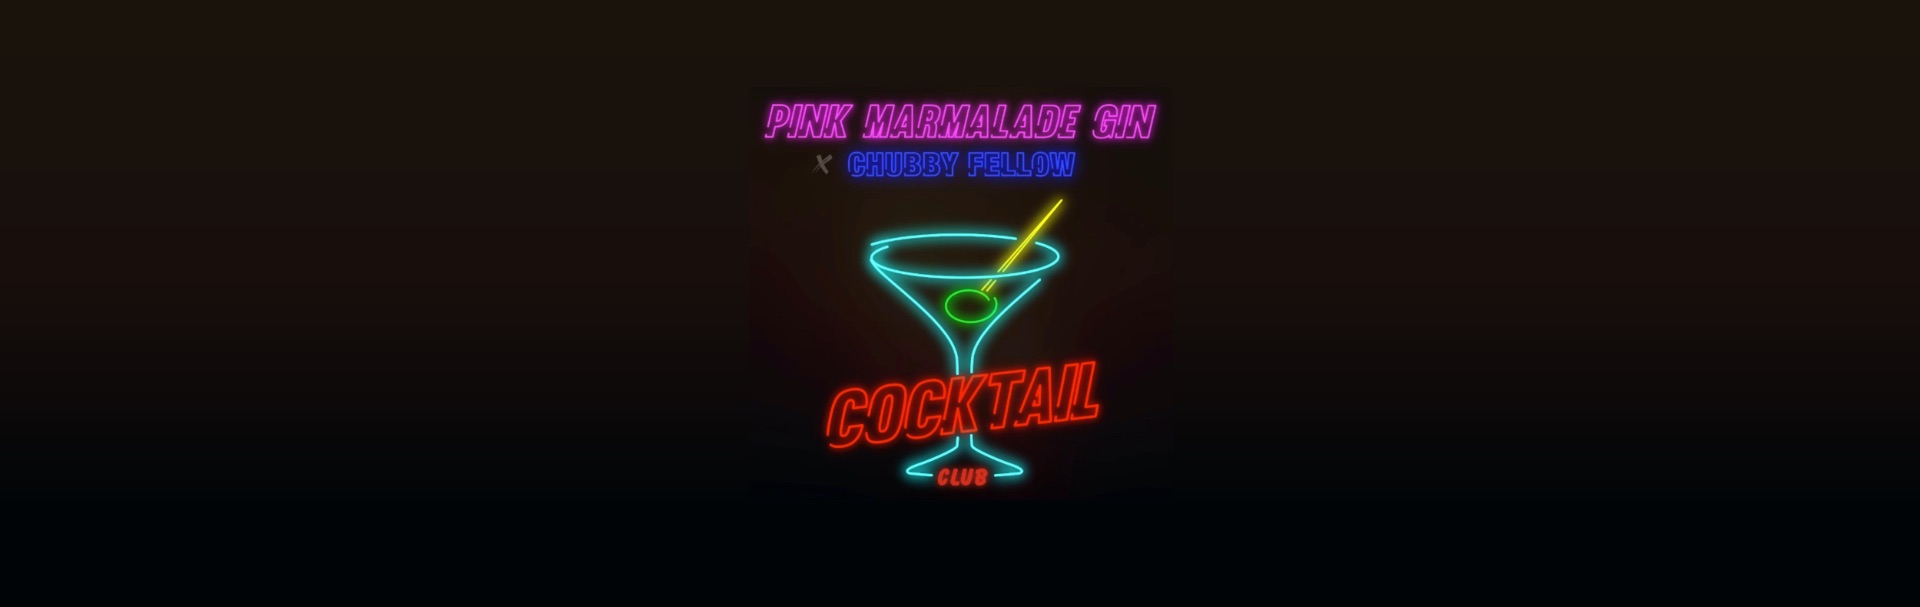 neon sign saying Pink Marmalade Gin x Chubby Fellow